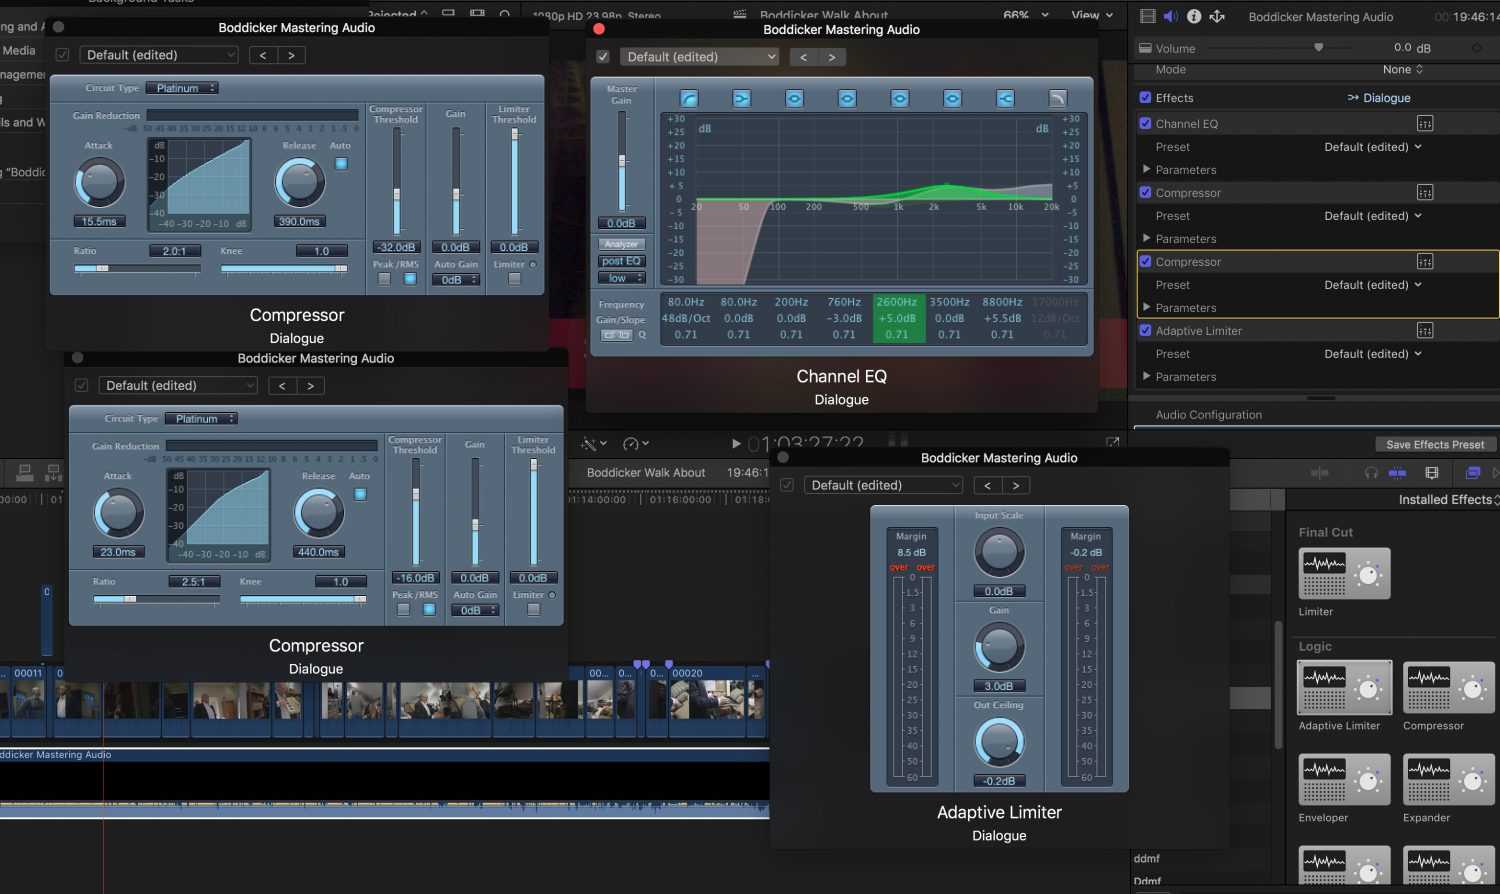 Adobe Premiere Pro vs final cut audio editing